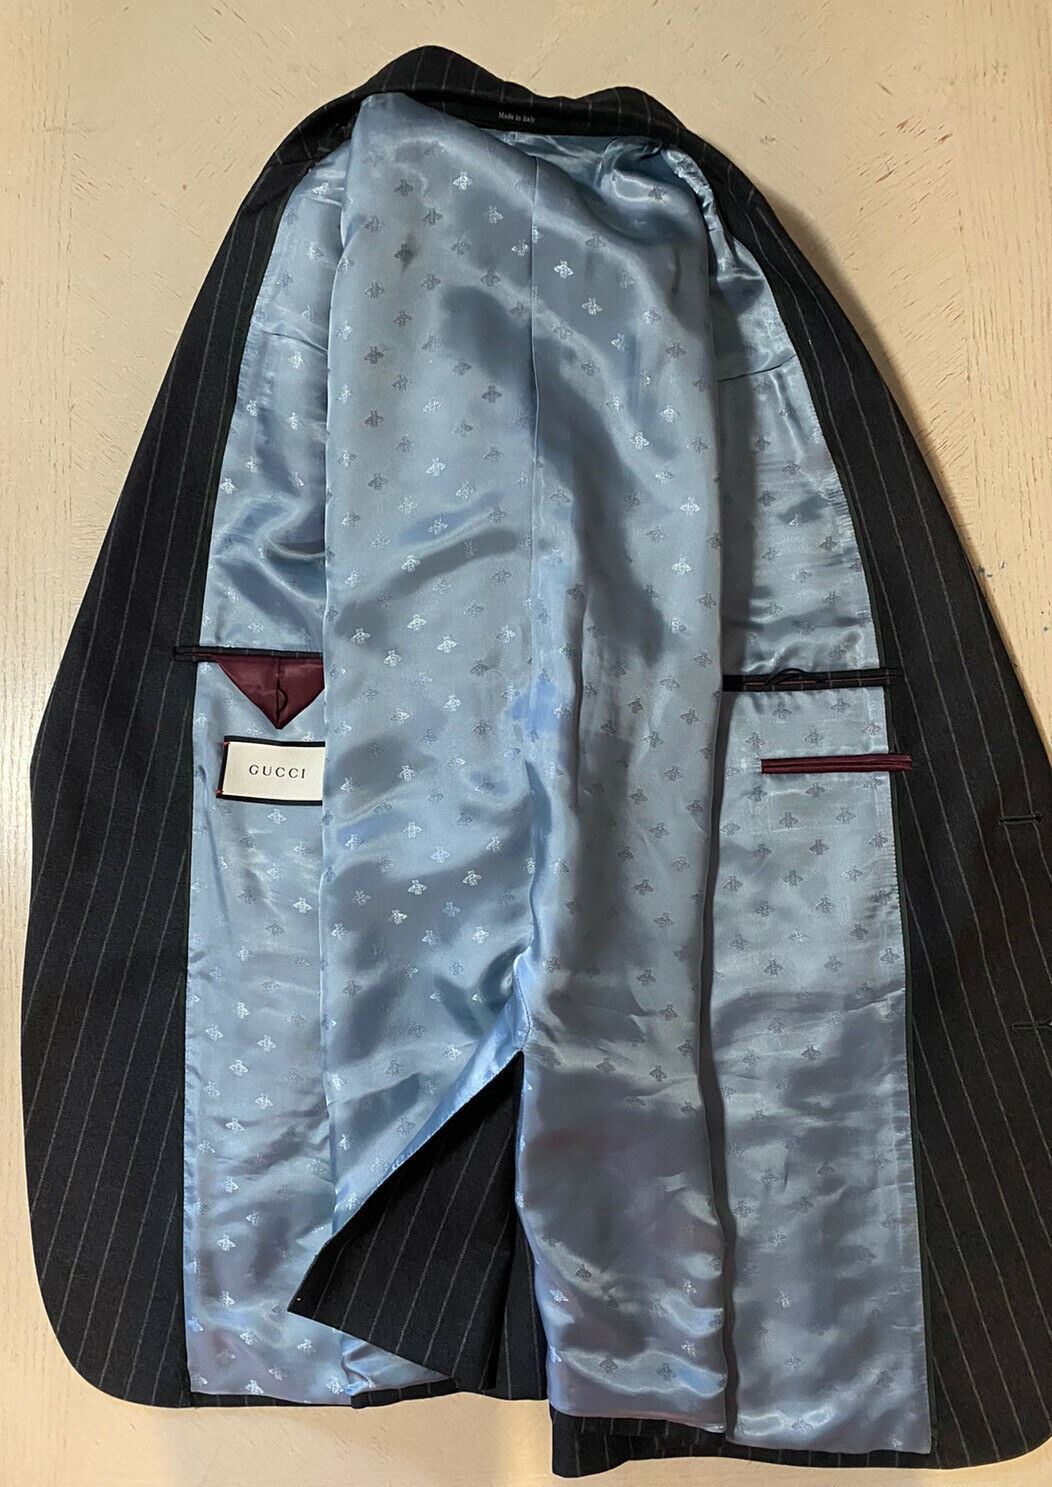 New $4490 Gucci Men’s Suit Striped DK Gray 46R US ( 56R Eu ) Italy